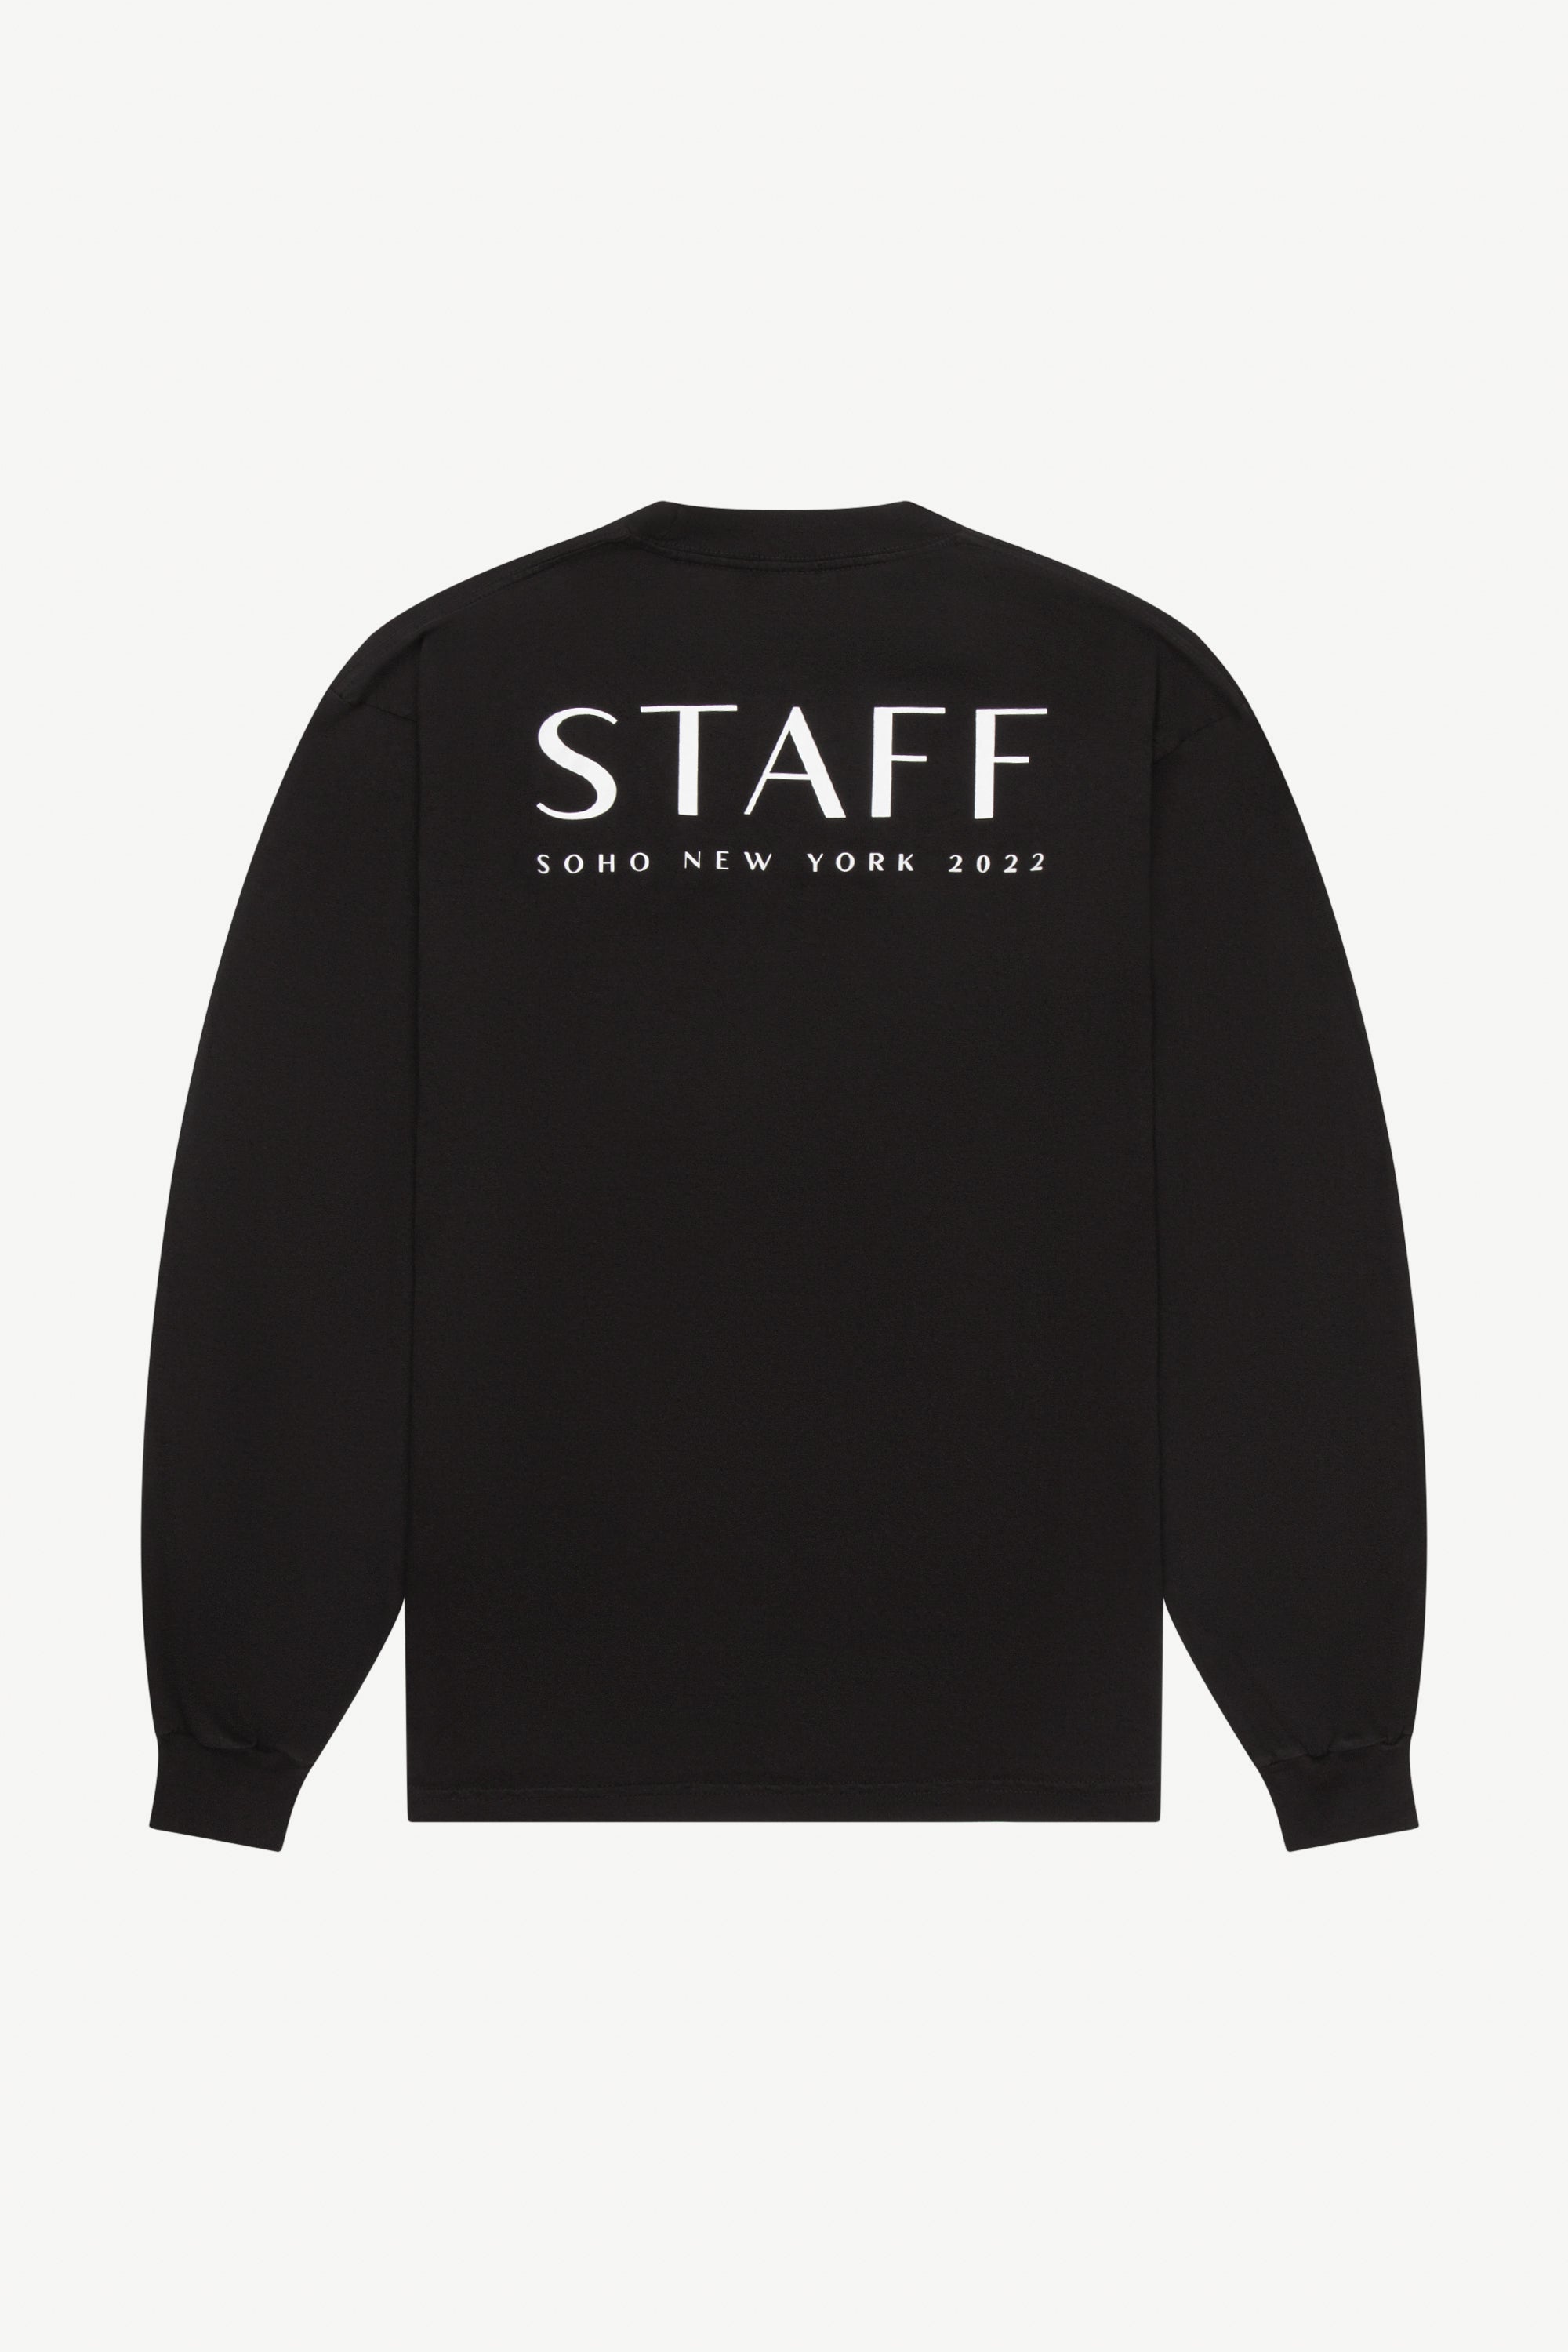 Veiled Merch Long Sleeve T Shirt - Staff Black Veiled Collection 